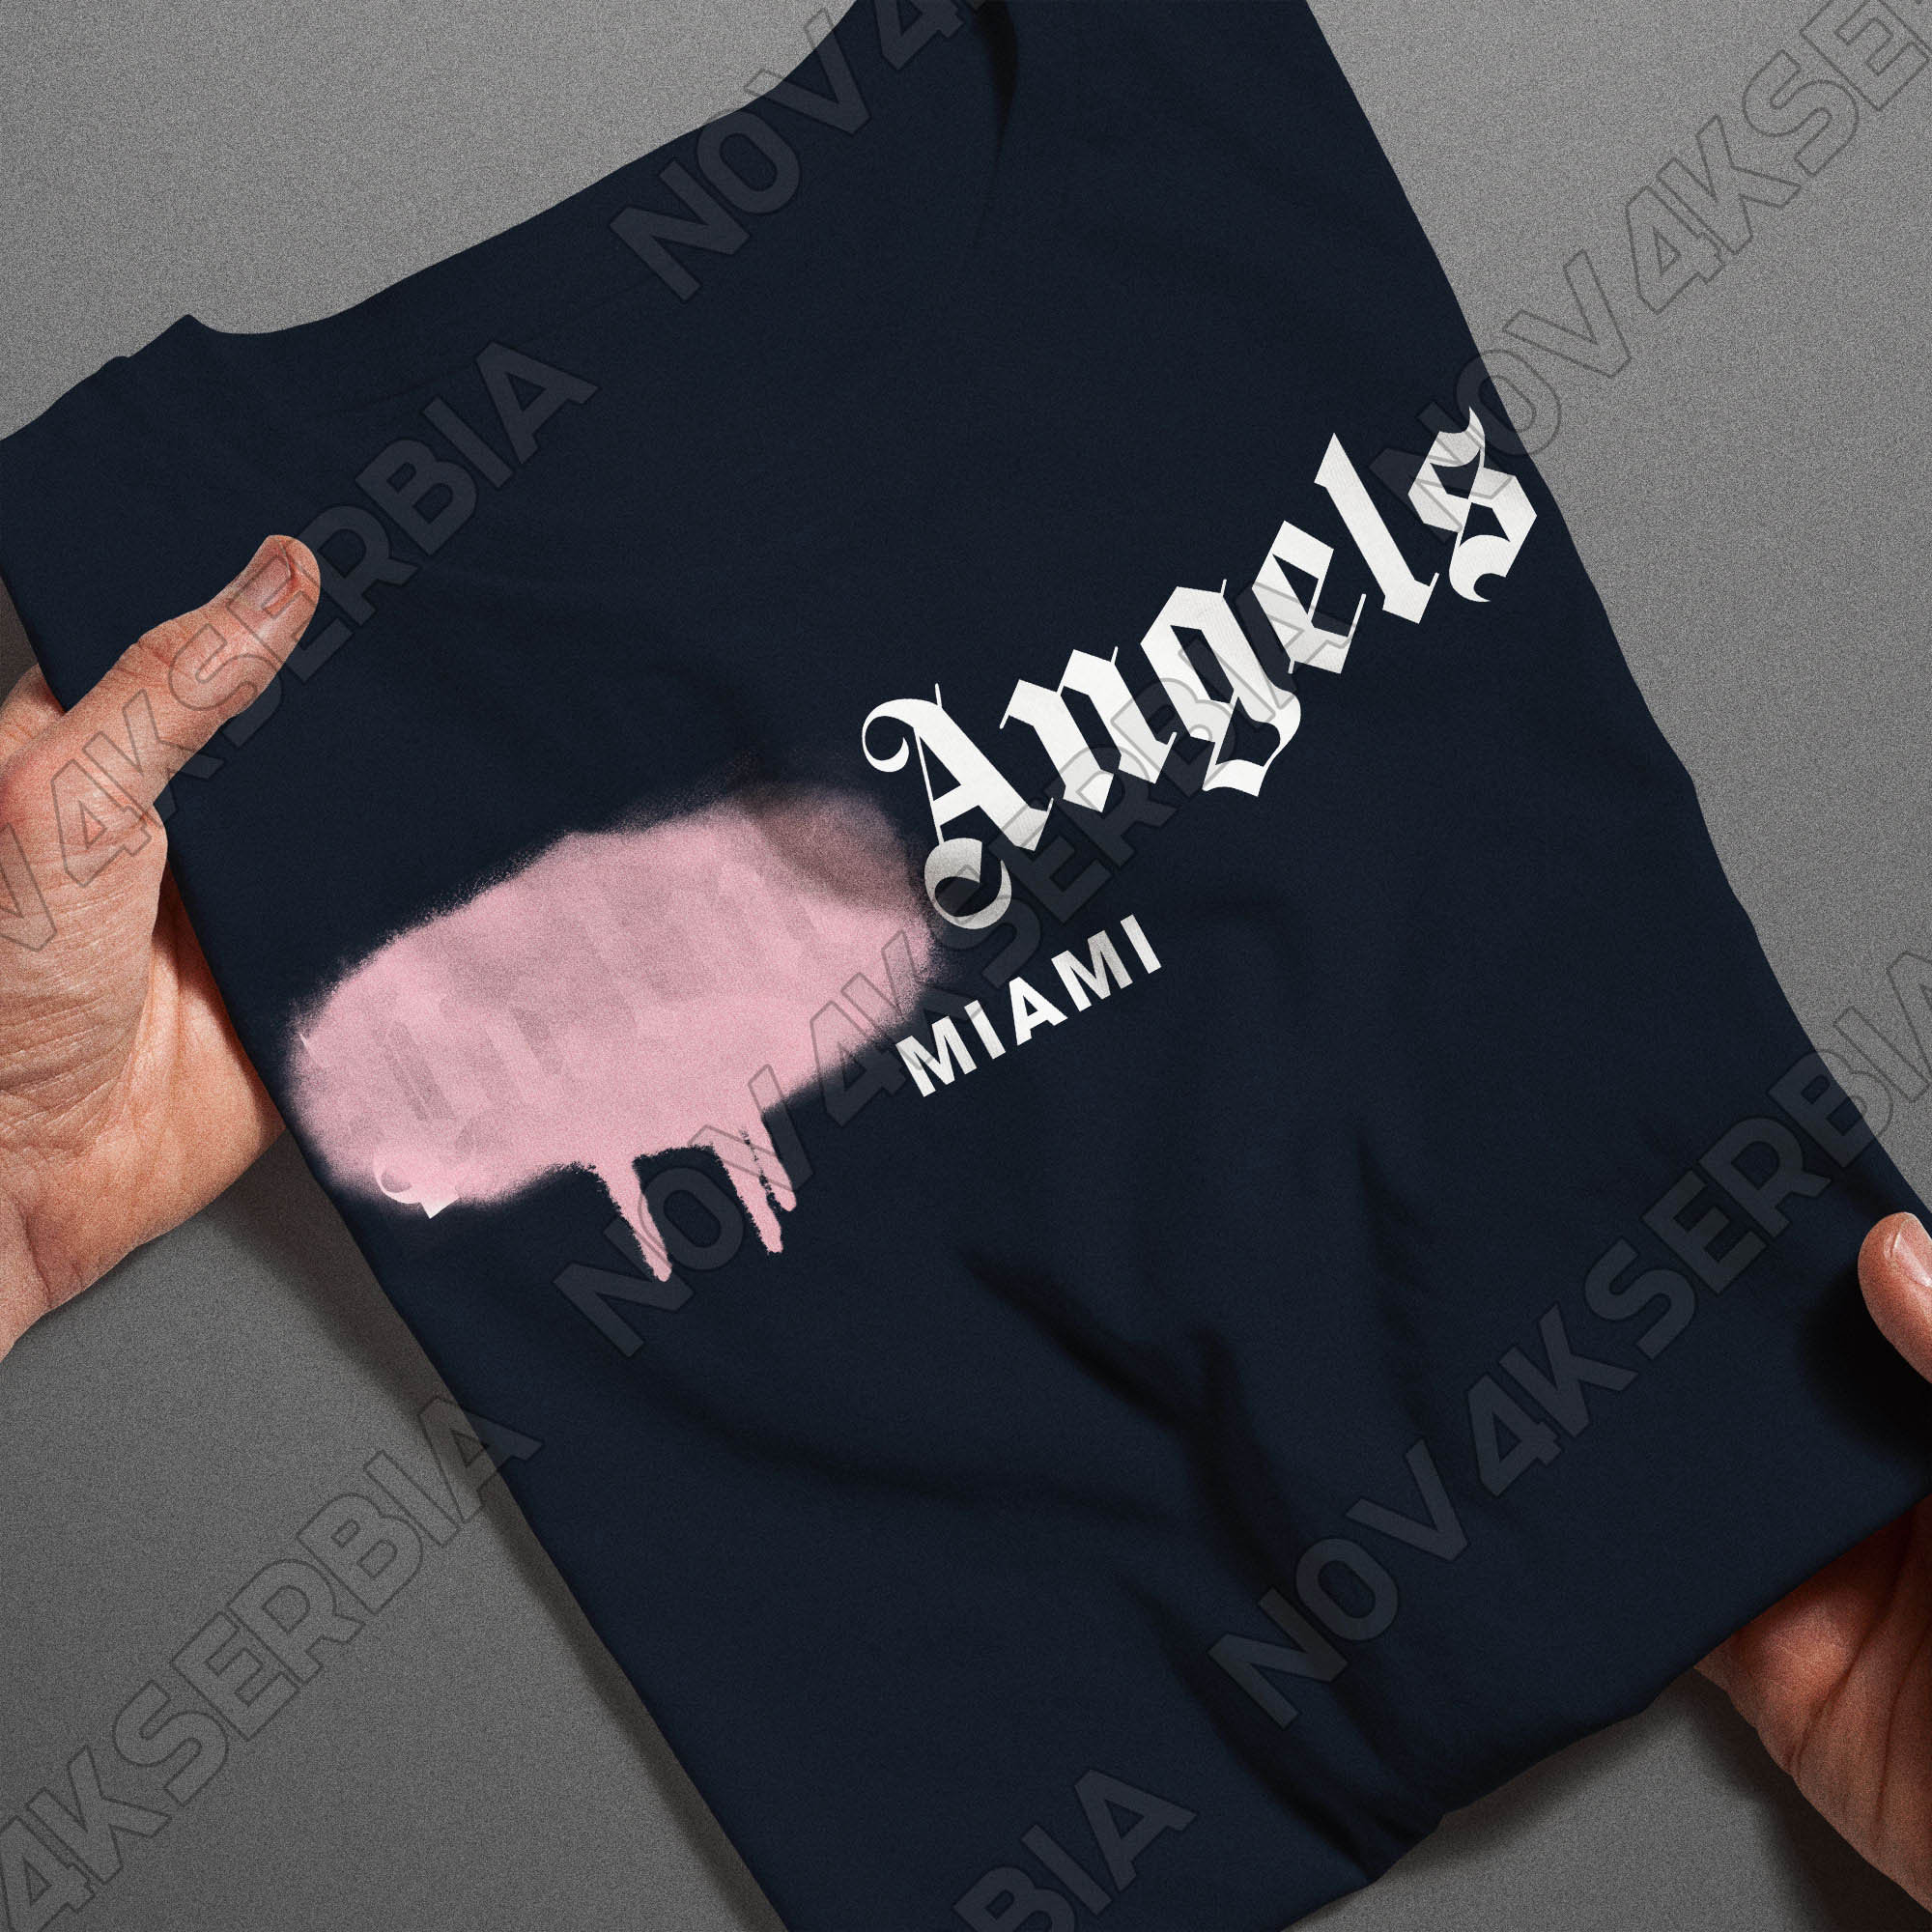 Palm Angels miami T-shirt - ShopStyle